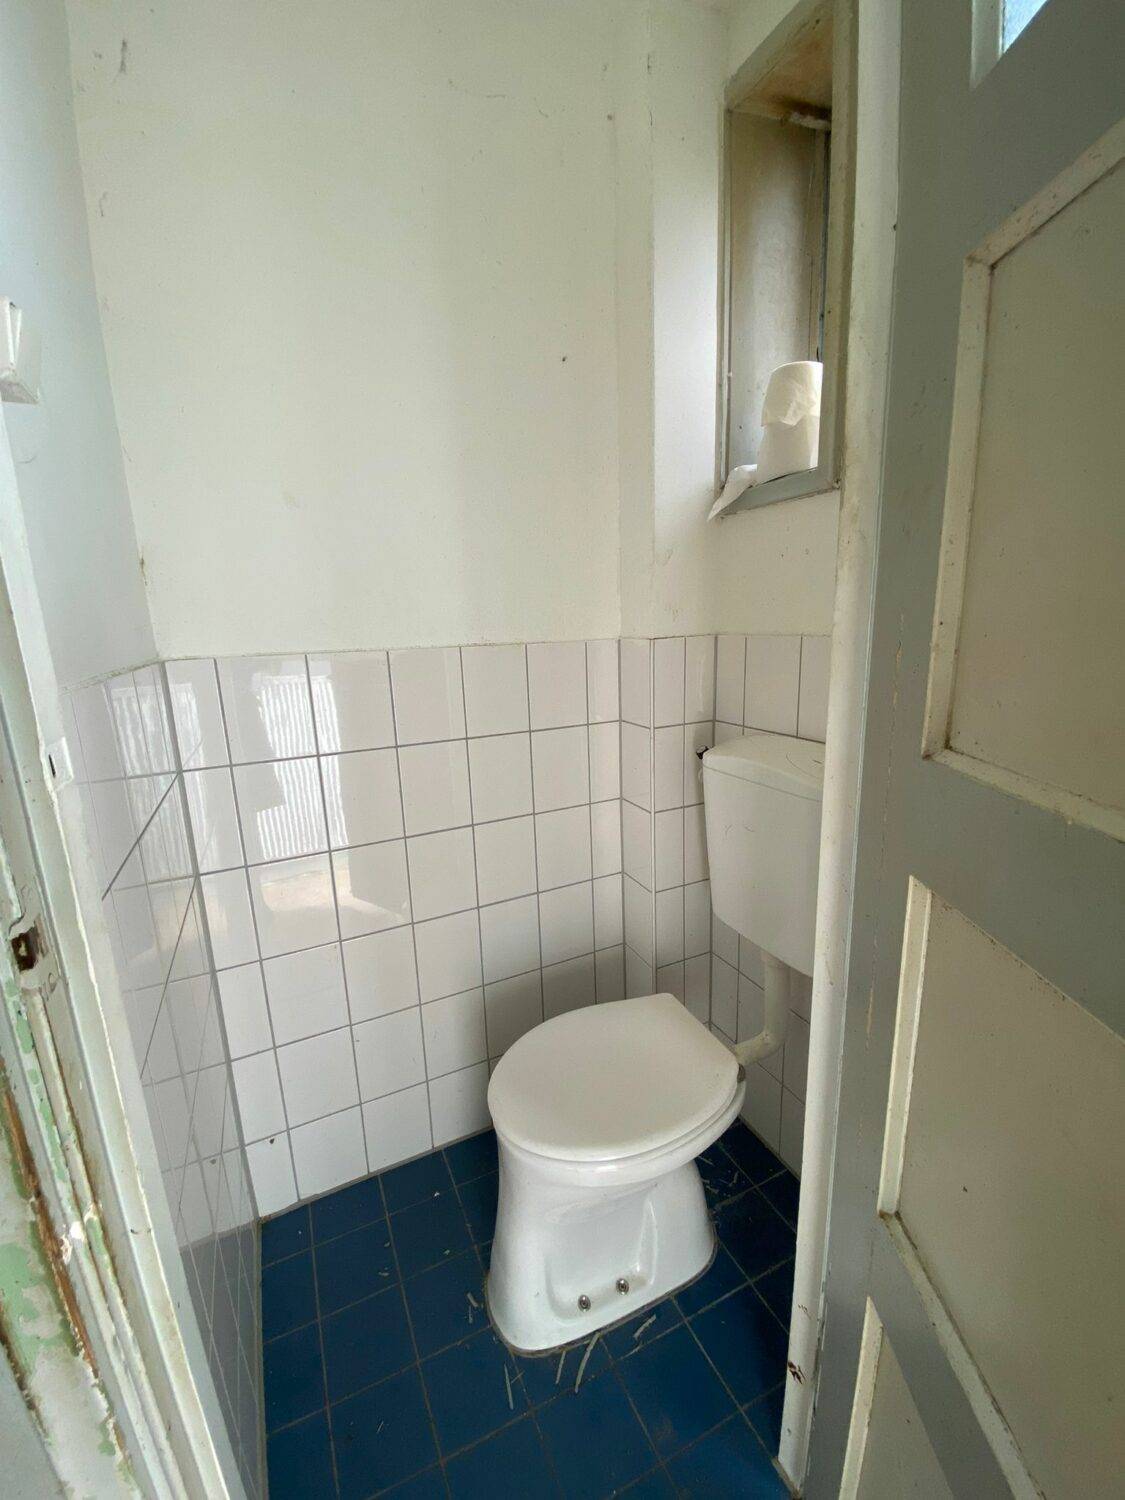 13 toilet